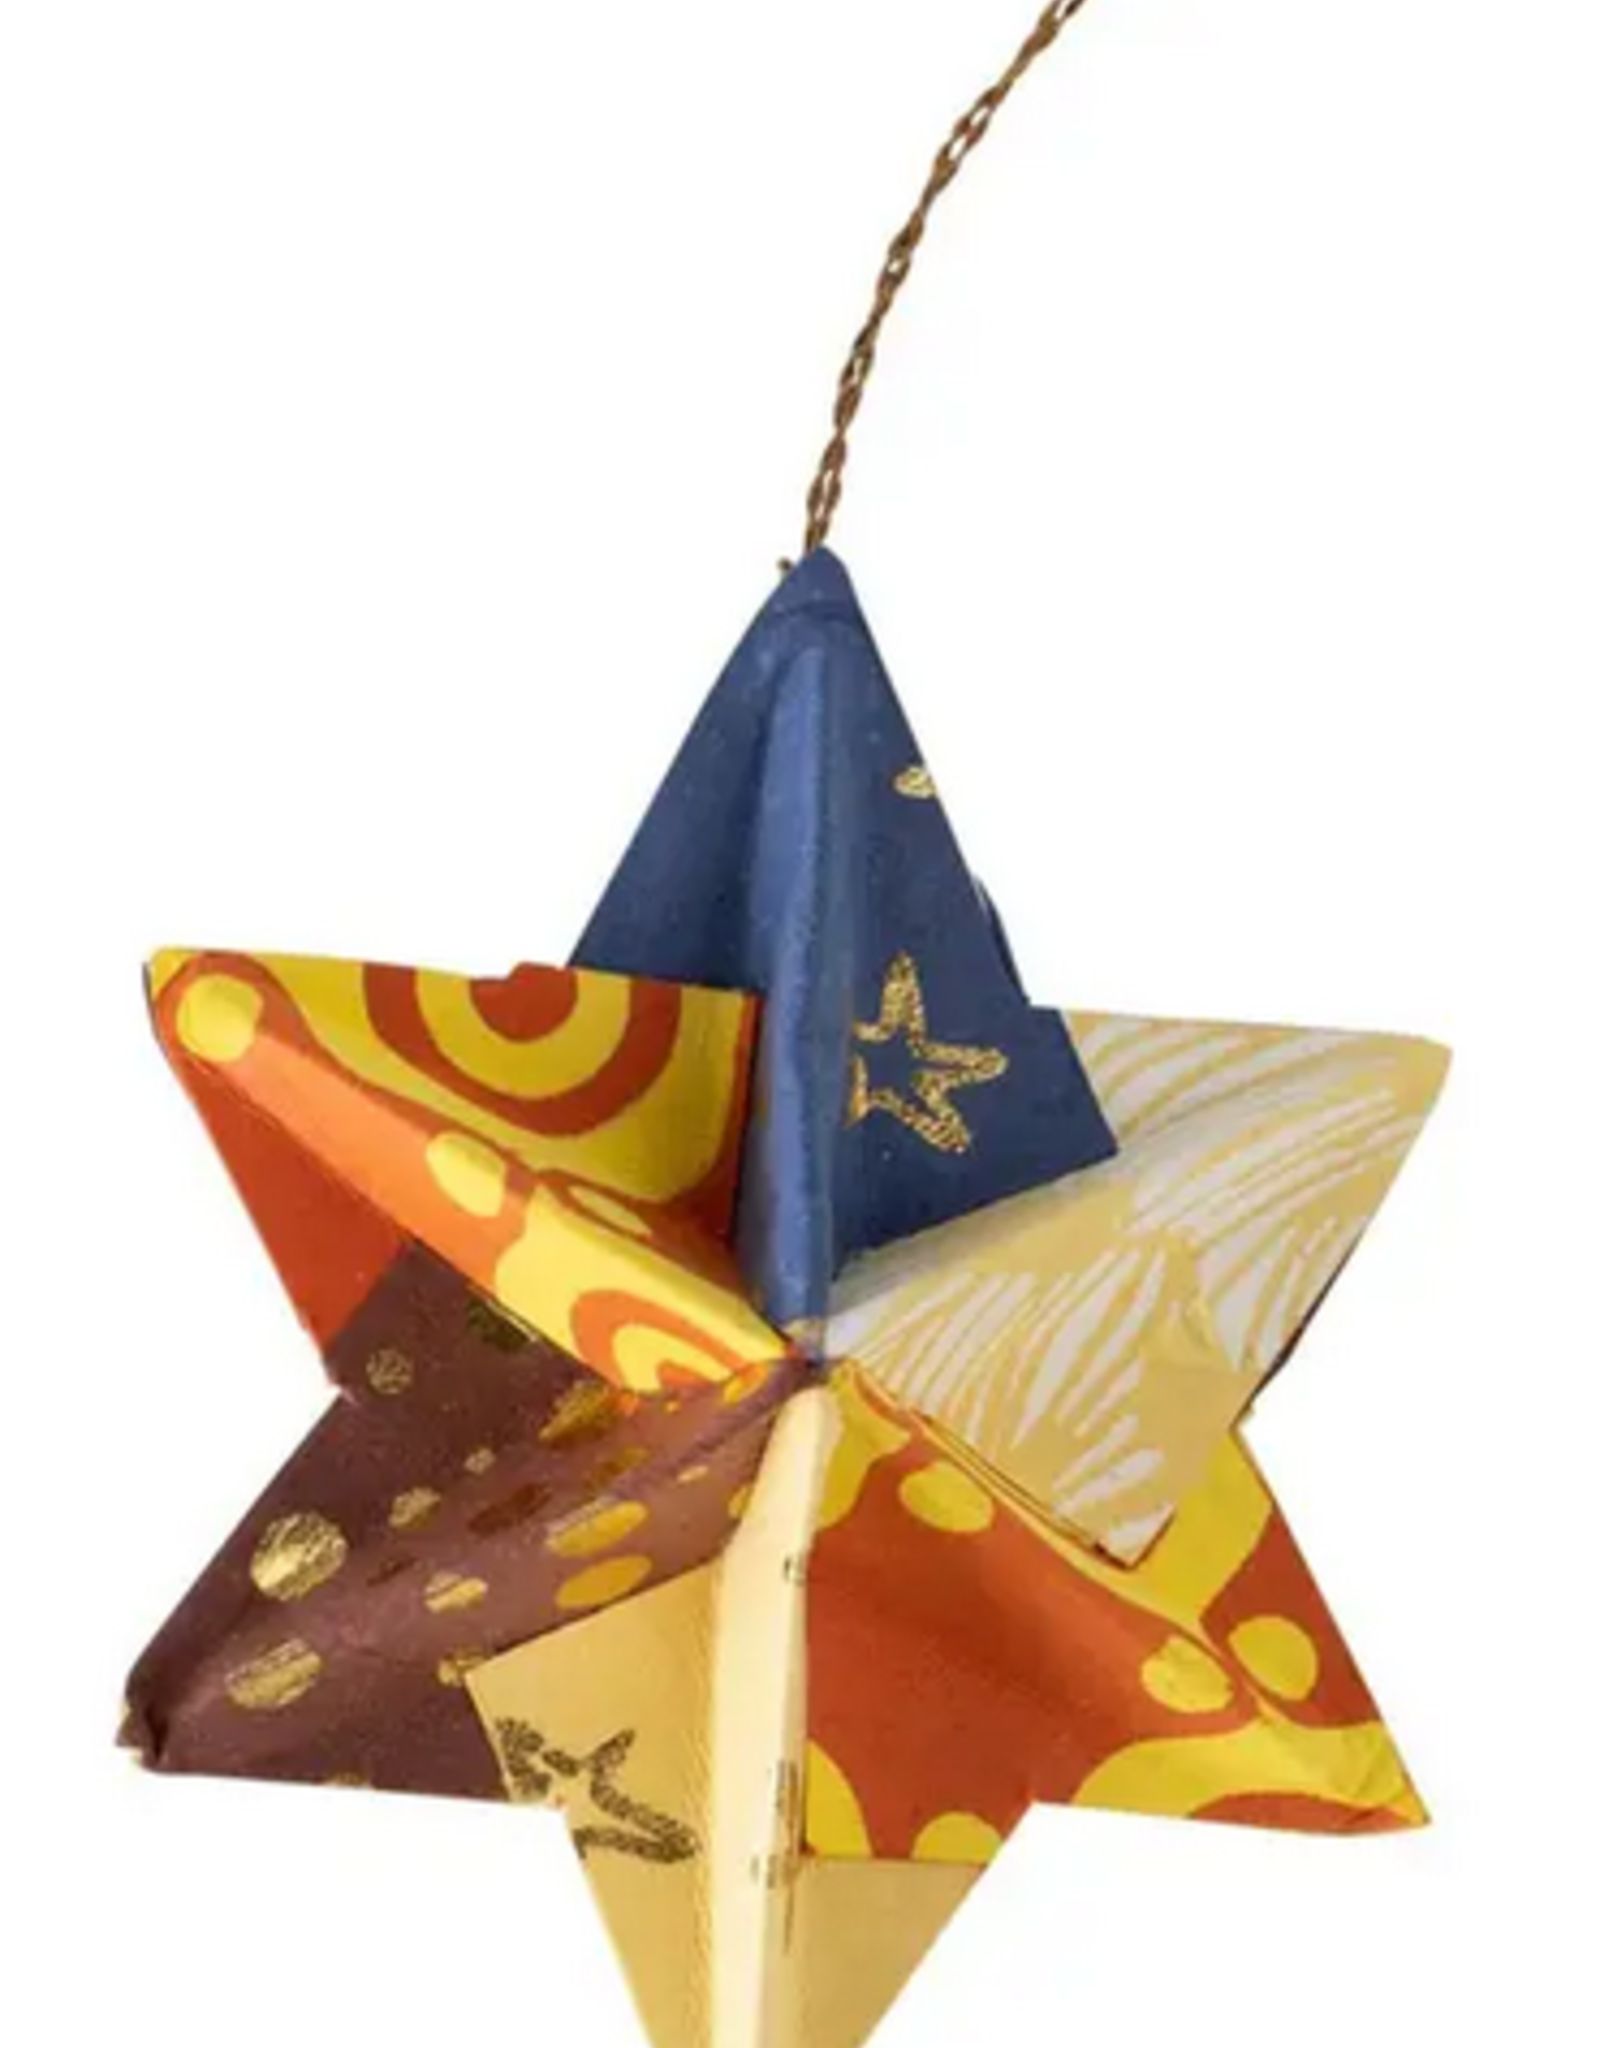 Bangladesh Ornament Folded 6 Point Star - Bangladesh